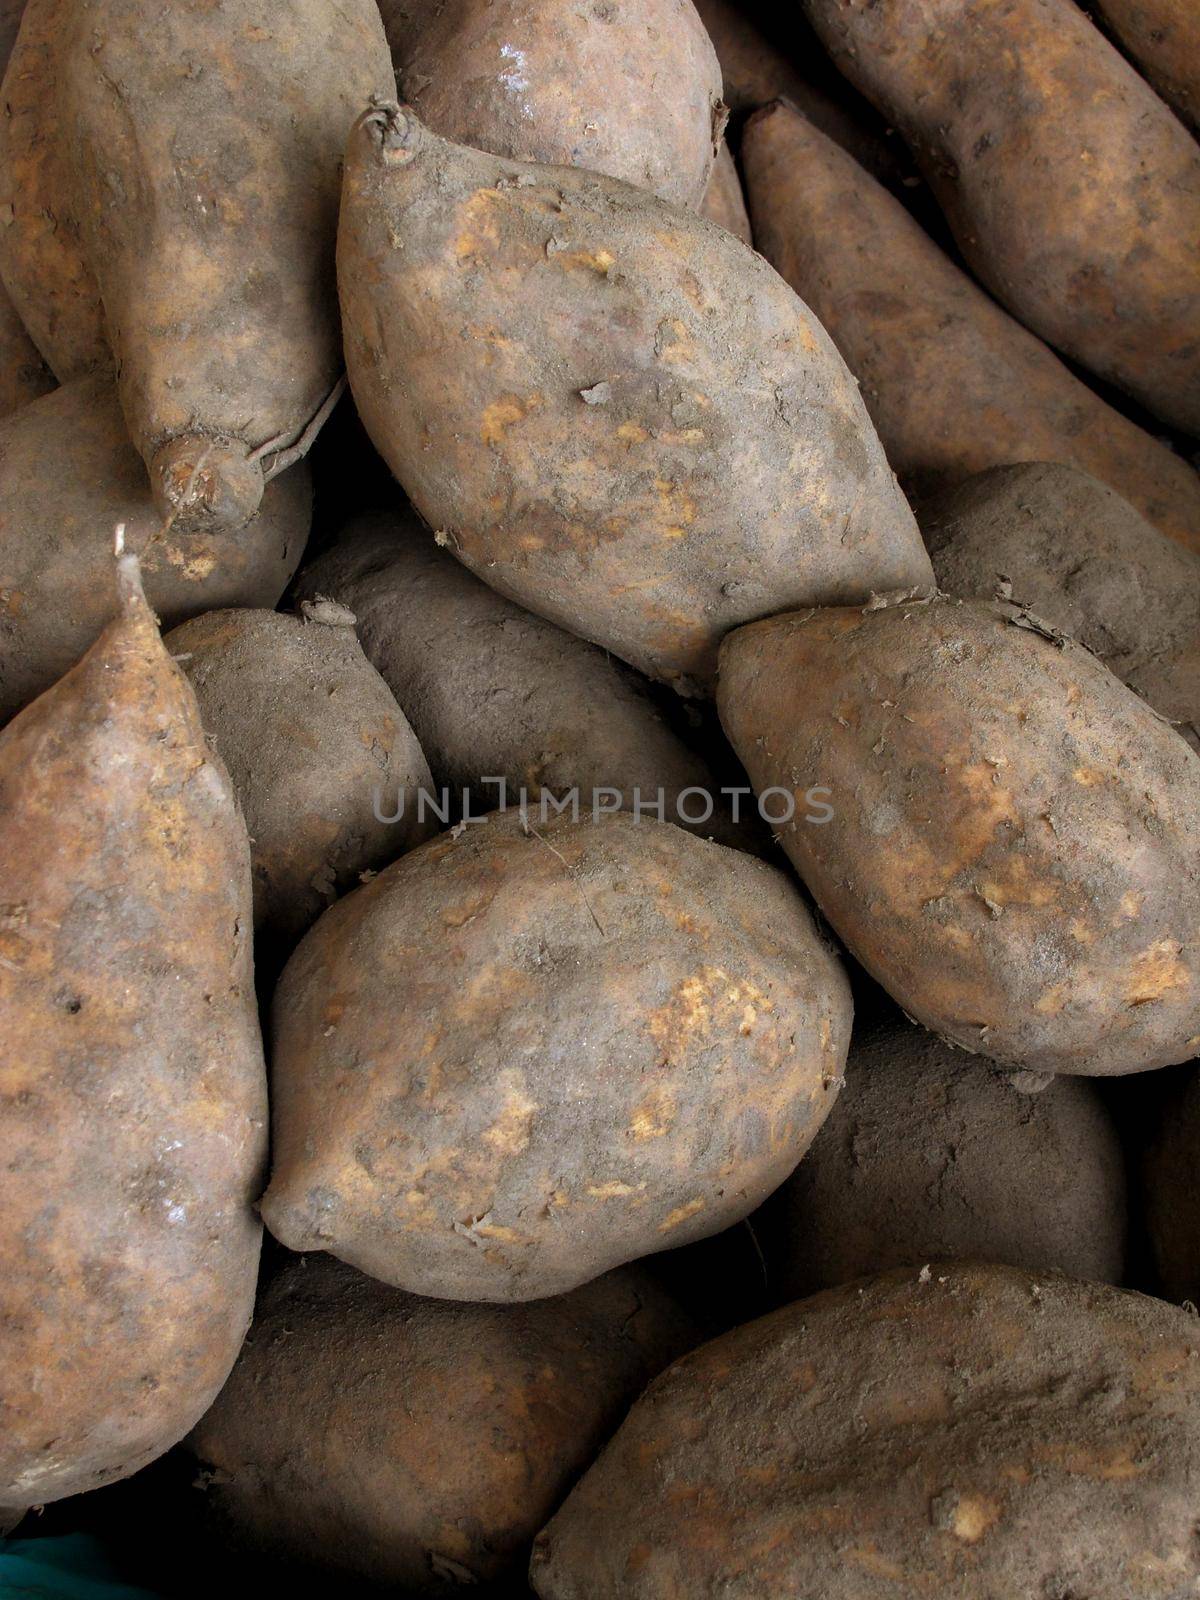 Sweet peruvian potato vegetable collection